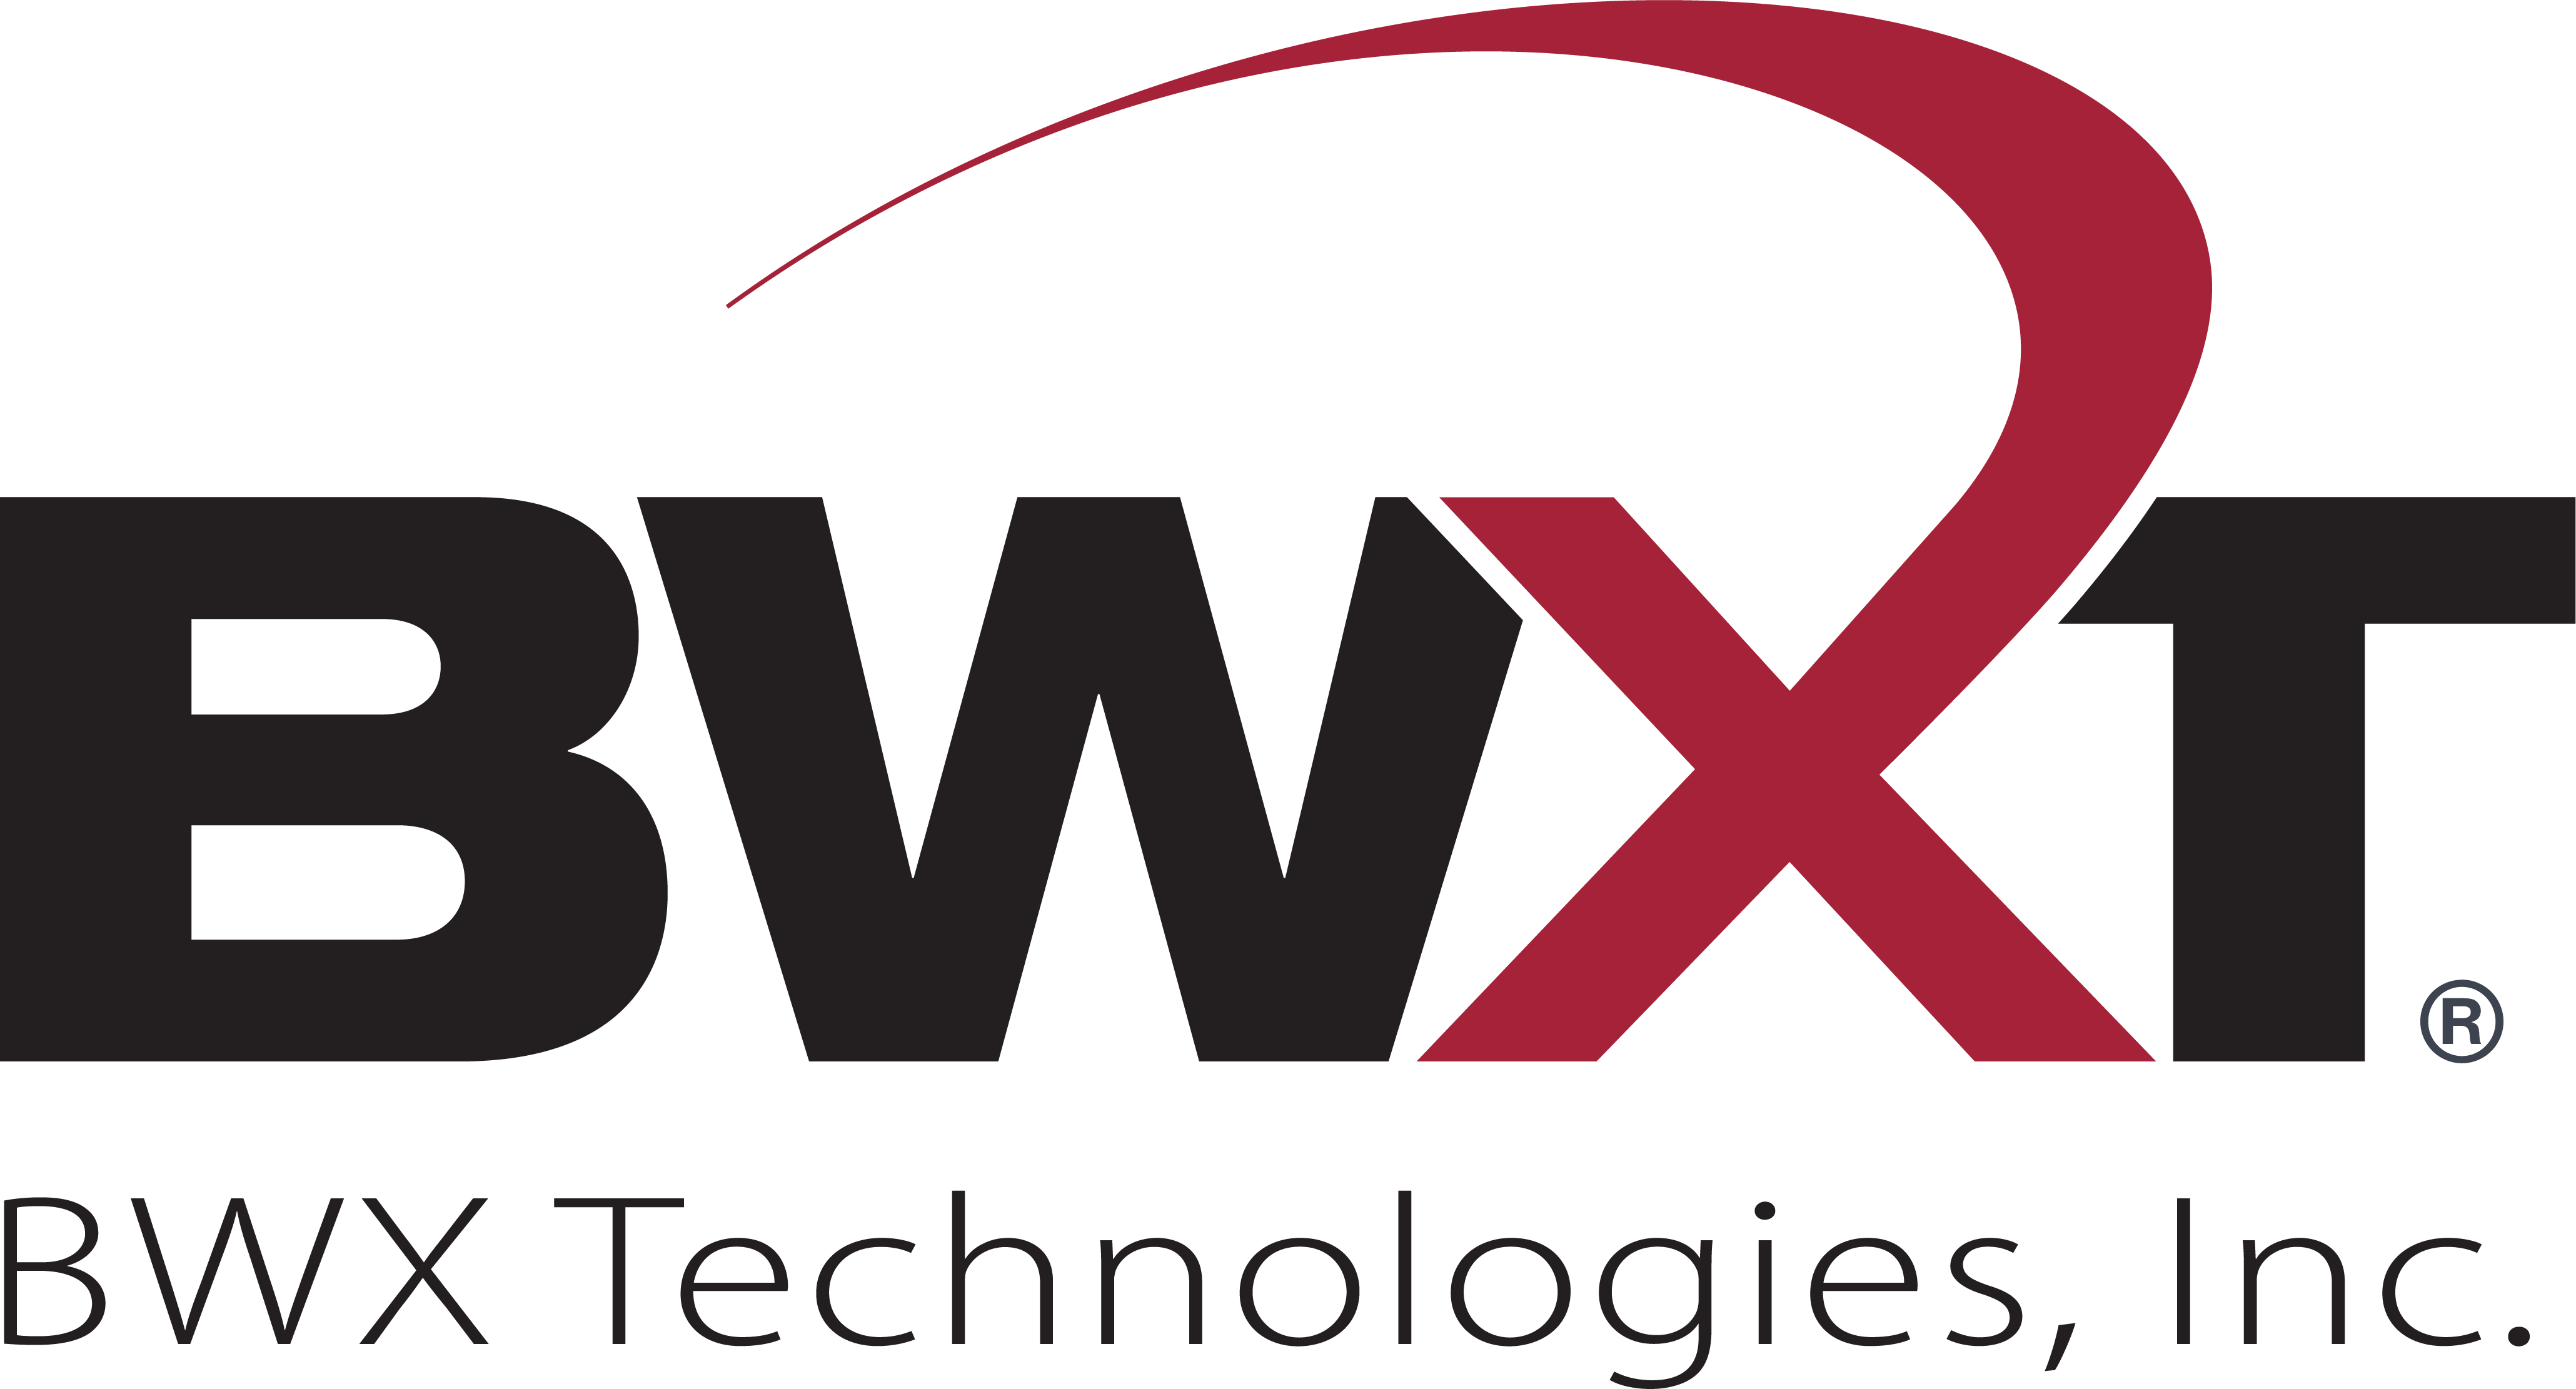 BWXT Advanced Technologies